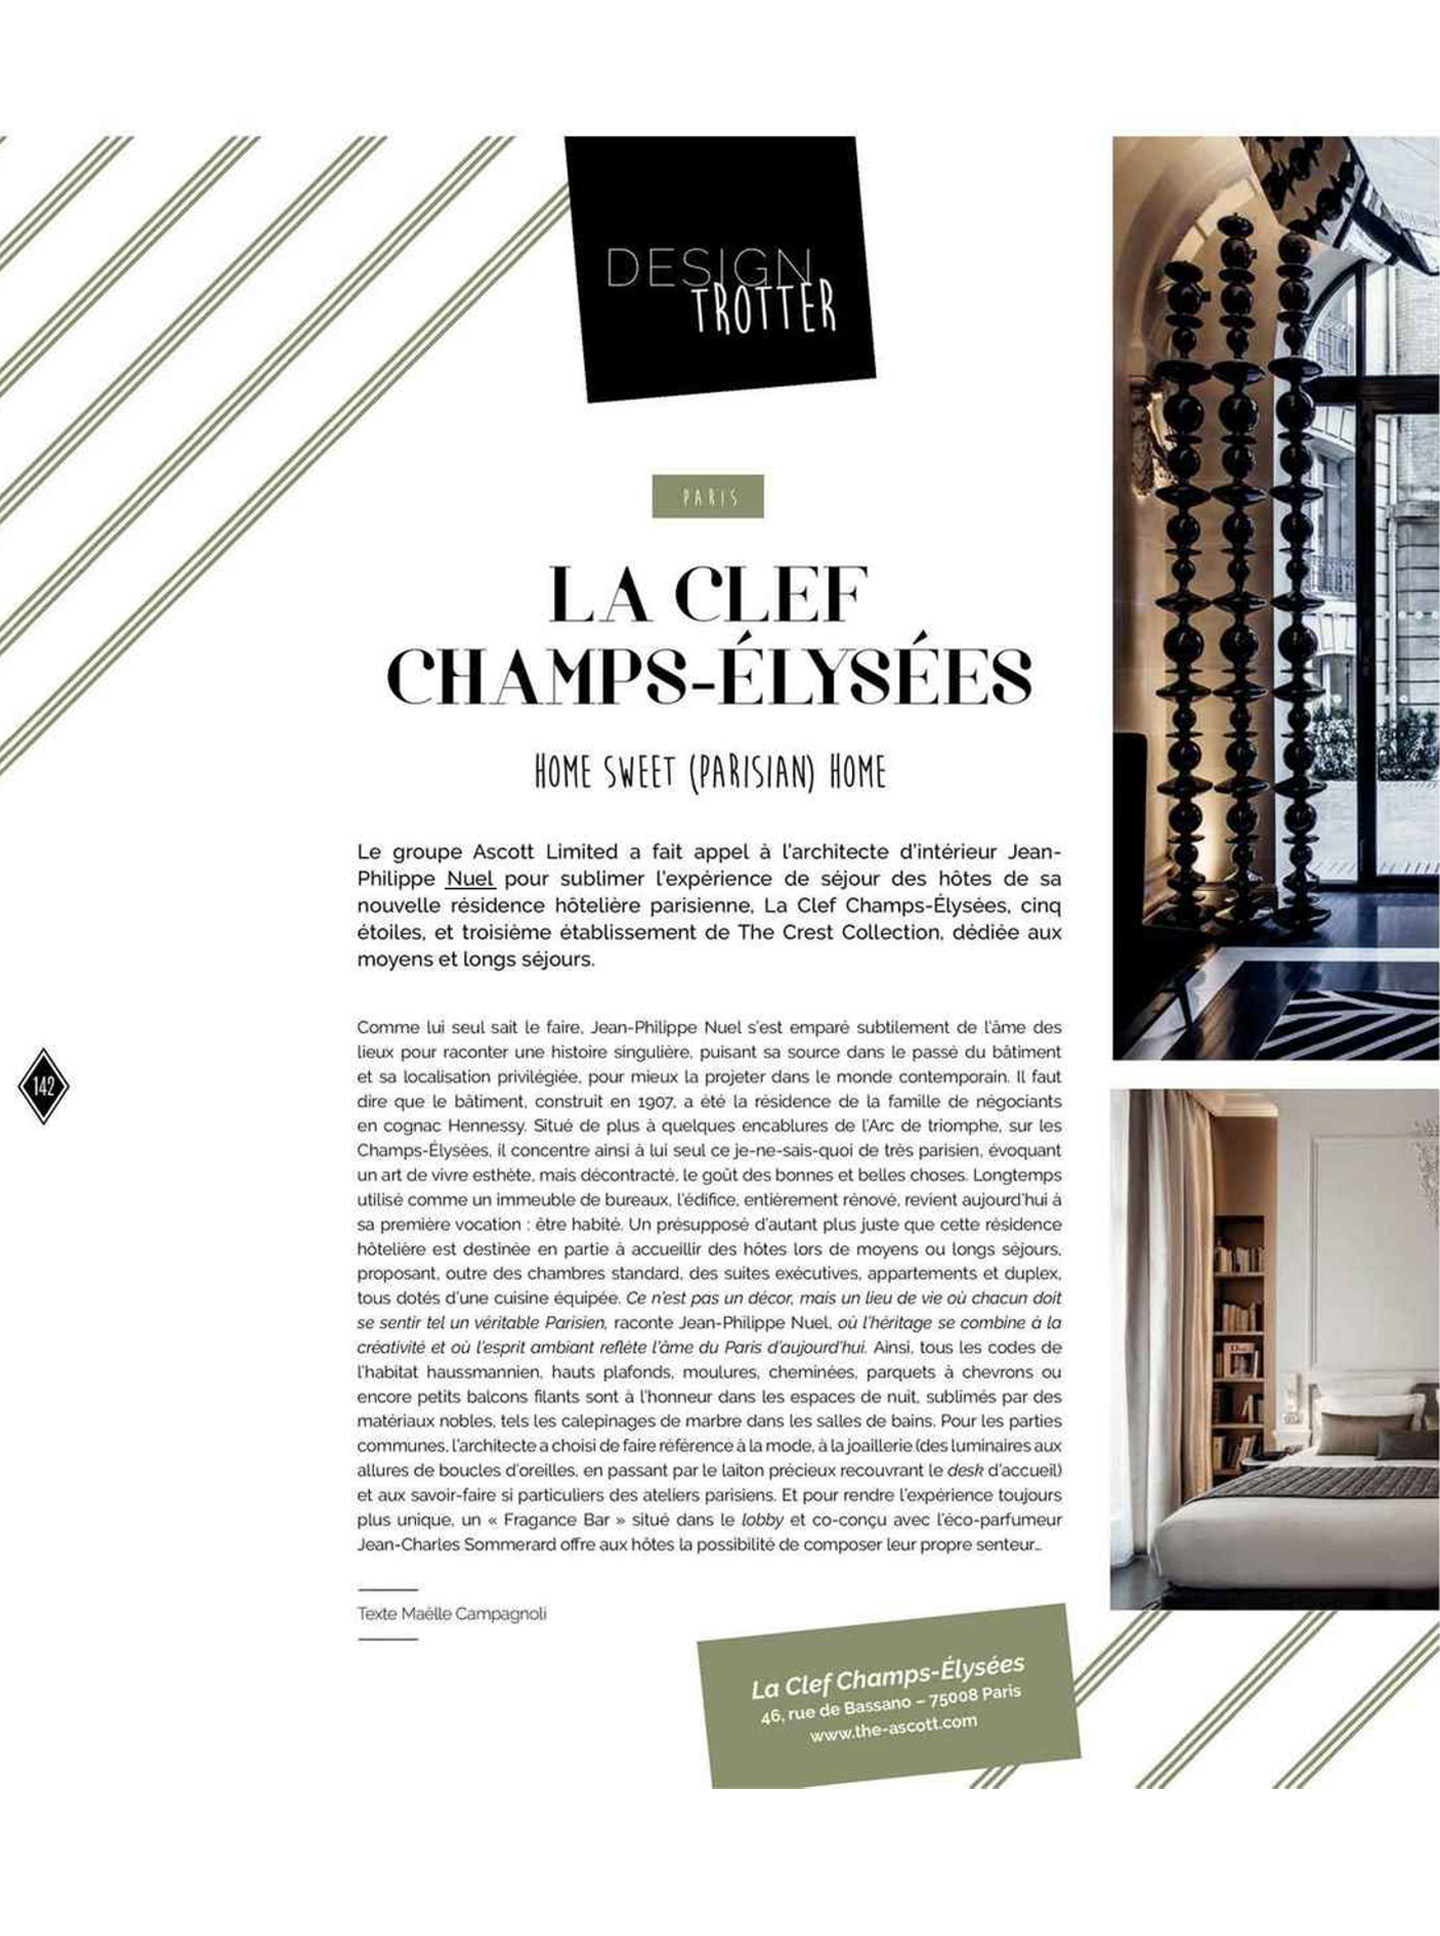 Article about la clef champs elysées paris realized by the studio jean-Philippe Nuel in the magazine domodéco, new lifestyle hotel, luxury interior design, paris center, french luxury hotel